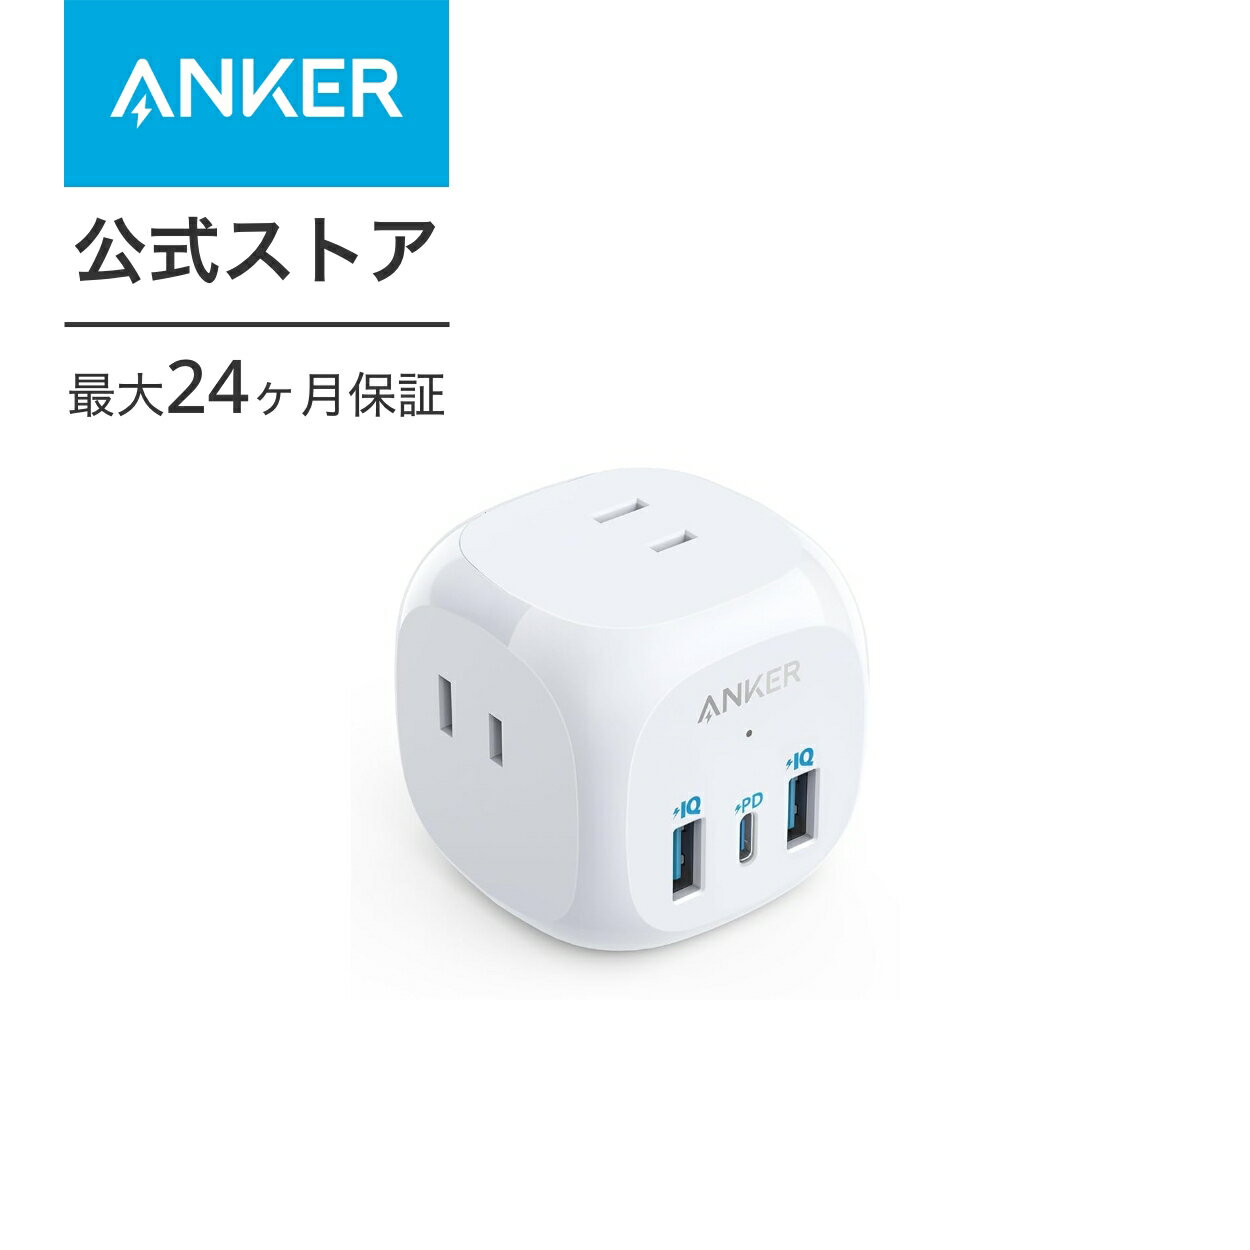 Anker PowerExtend (6-in-1)(USBタップ 電源タップ AC差込口 USB-Cポート USB-Aポート) MacBook PD対応 Windows PC iPad iPhone Galaxy Android スマートフォン